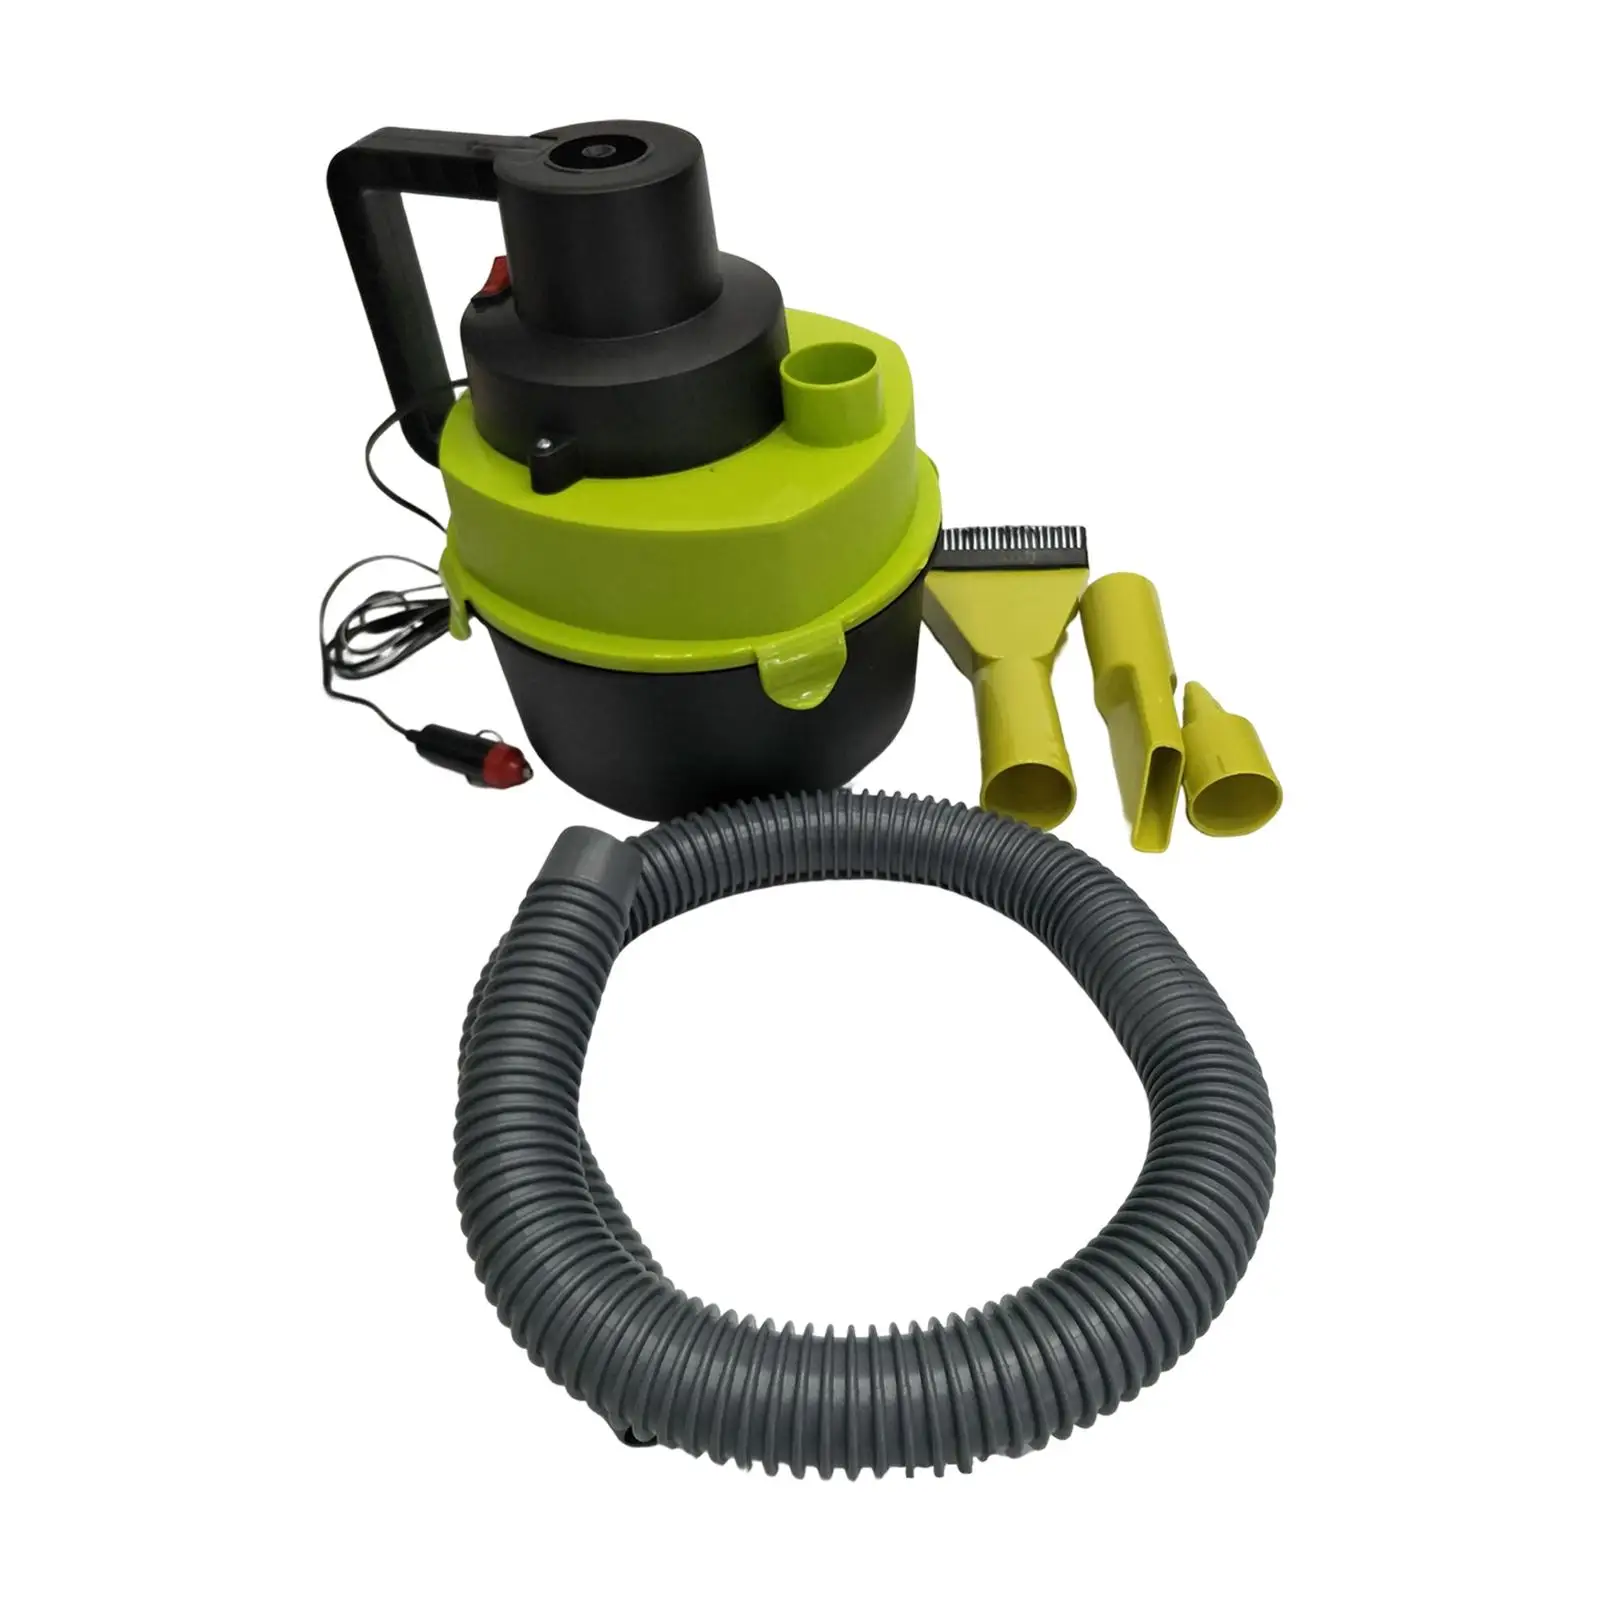 Car Vacuum Debris Dry Garbage 4L Multifunctional Handheld Liquid Shop Vacuum Cleaner for RV Home Window Seams Basement Cars